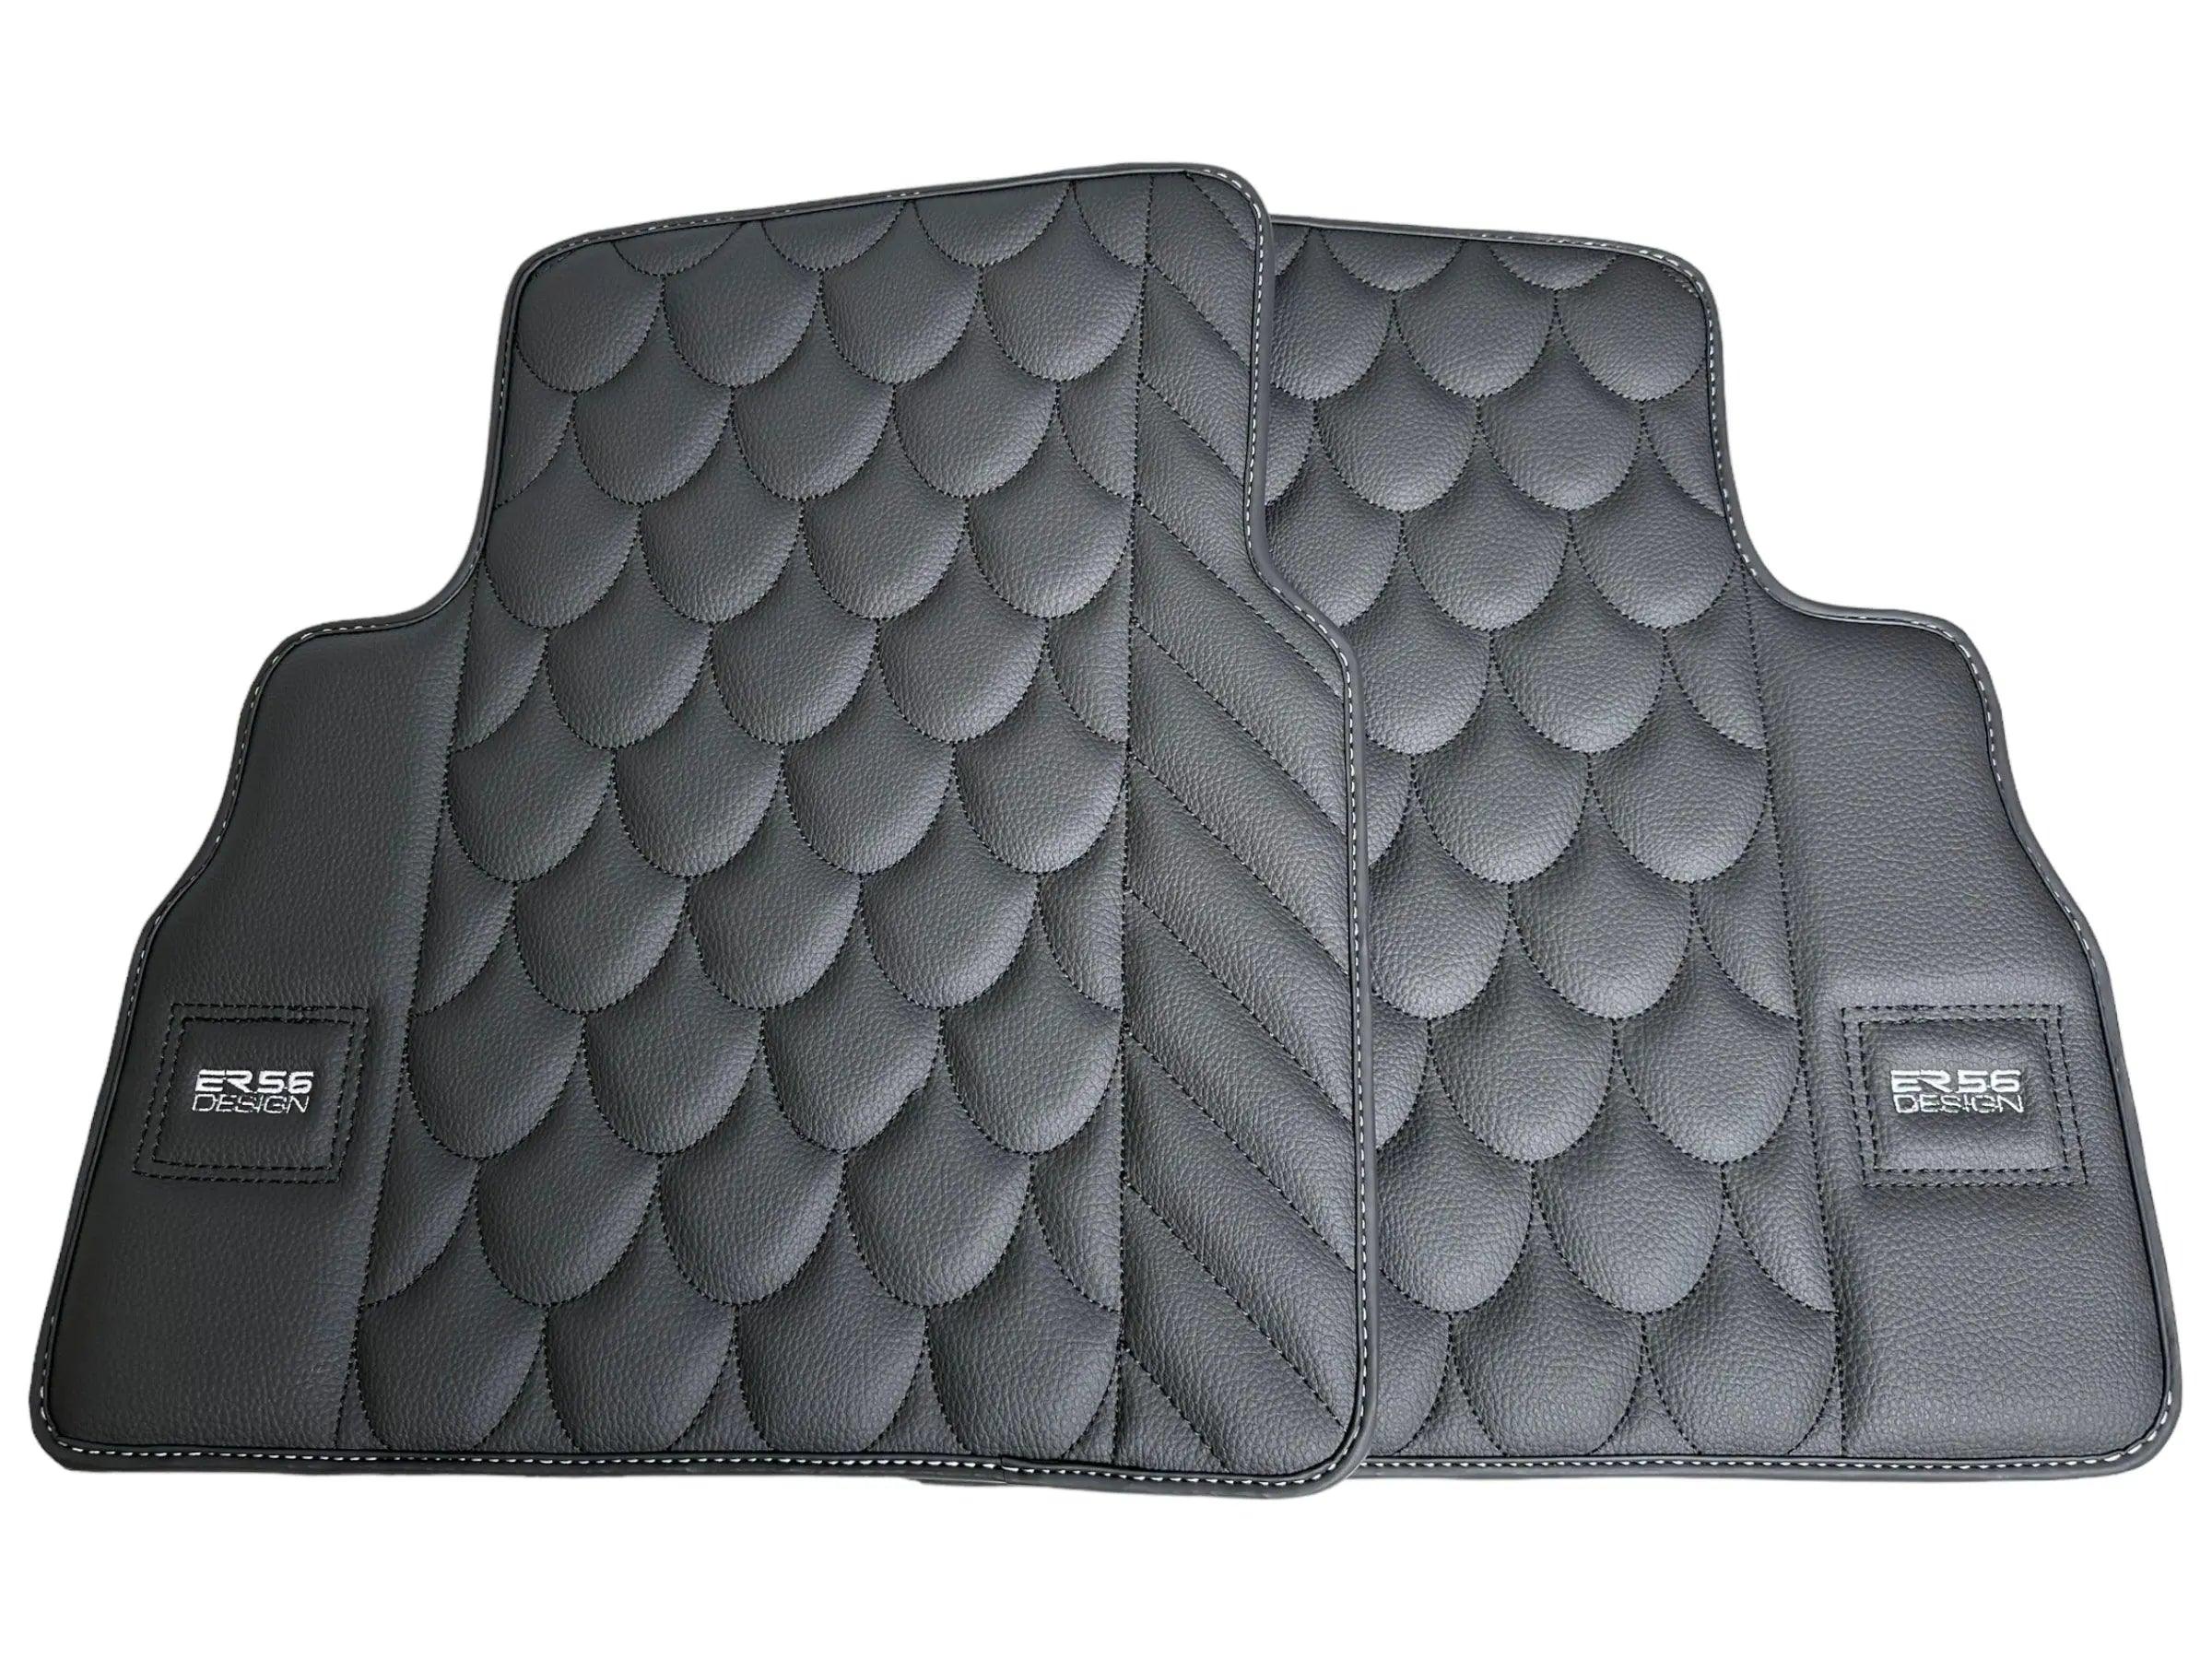 Black Leather Floor Mats For Mercedes-Benz G Class W463 (2008-2018) ER56 Design - AutoWin